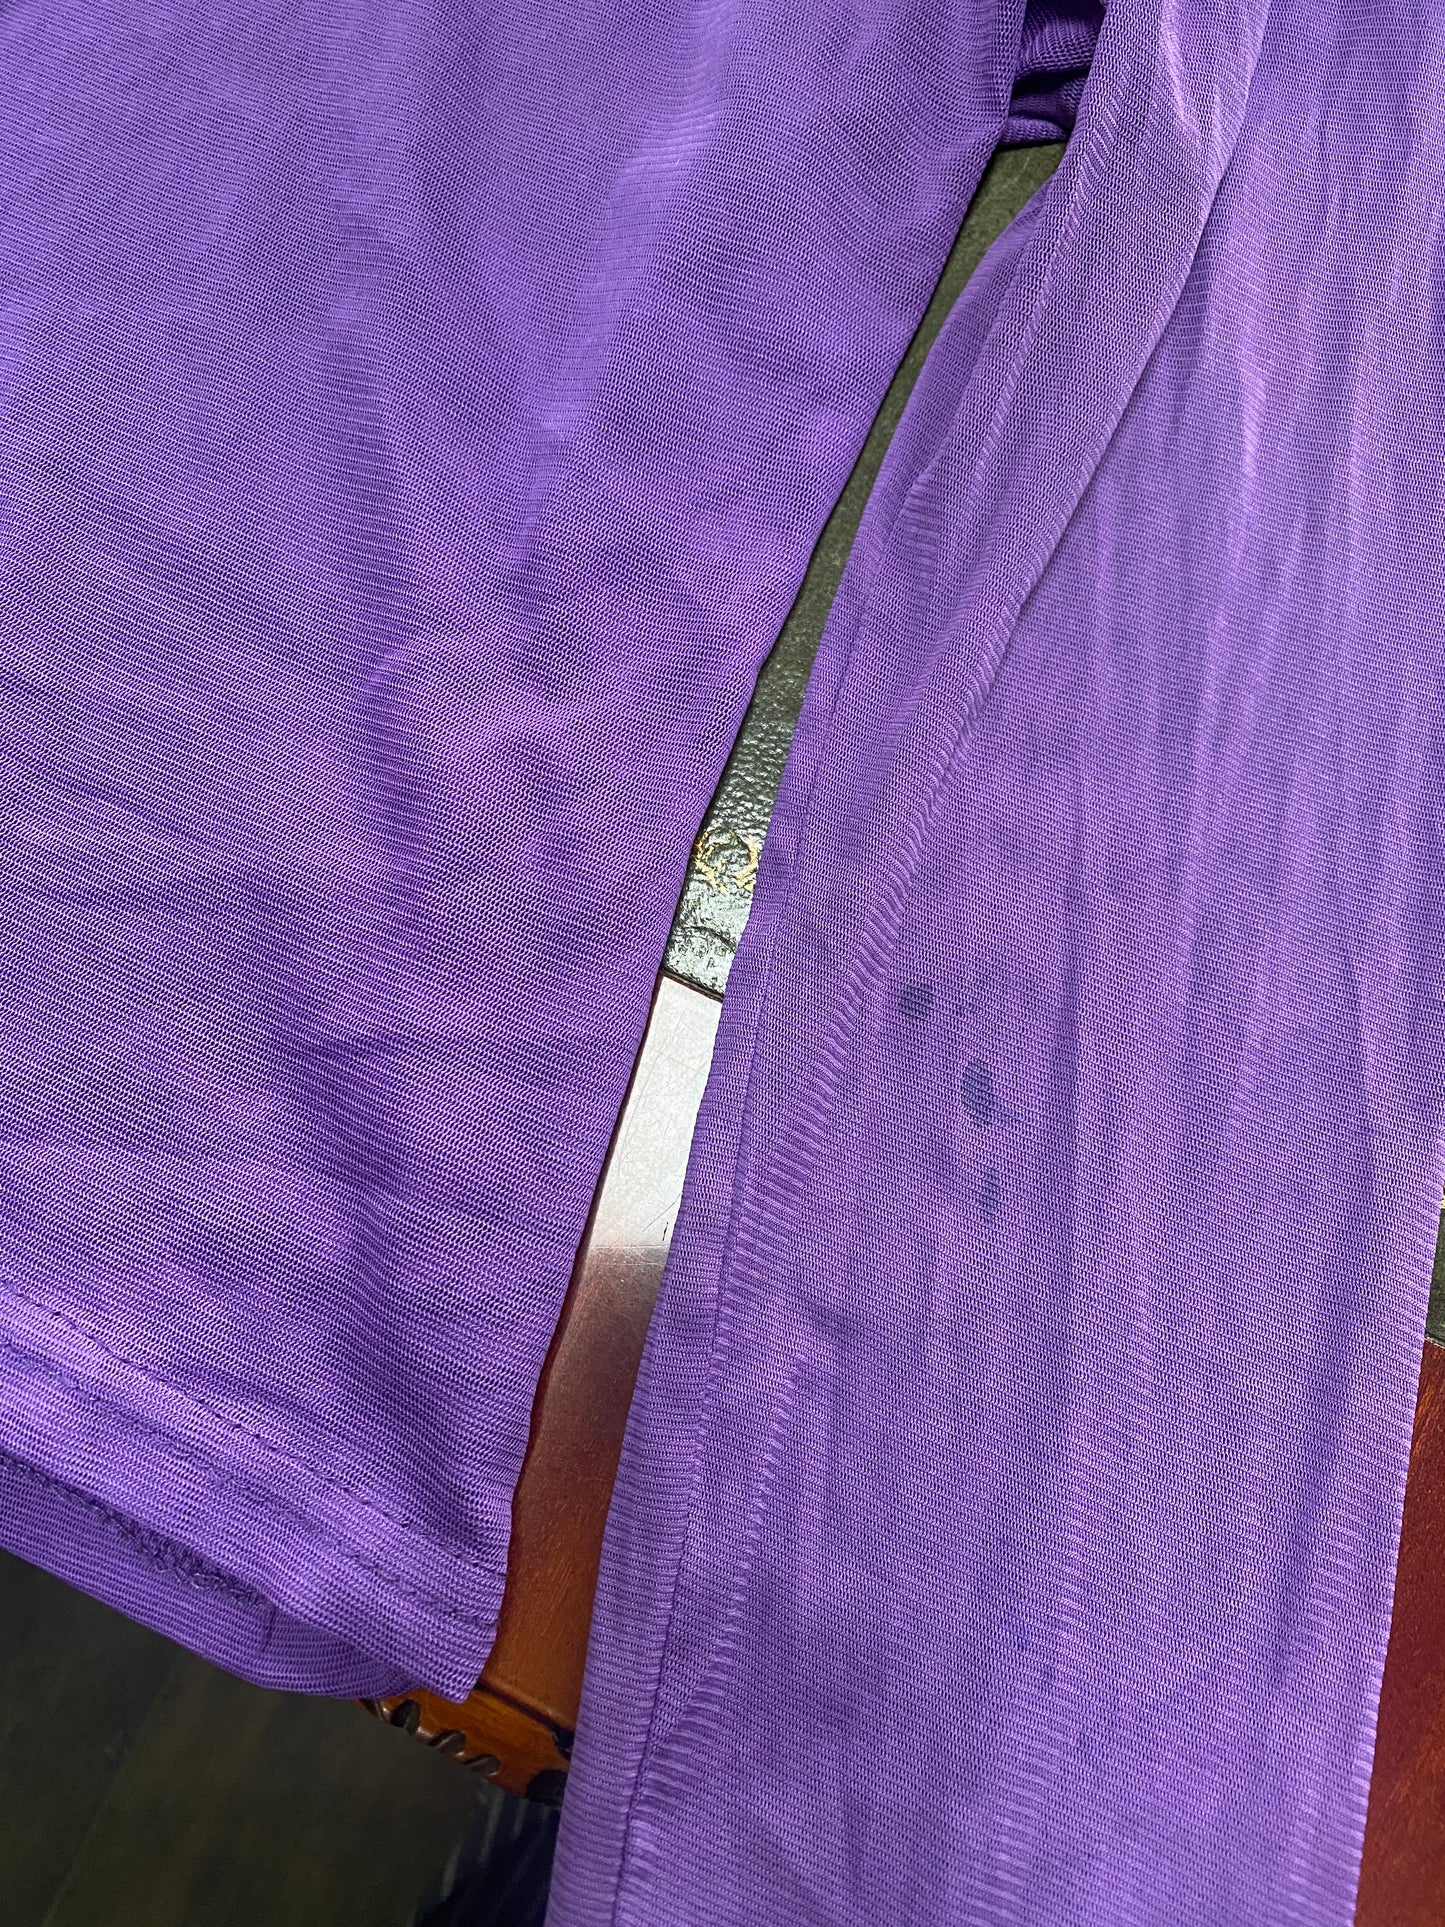 Purple mesh top - size L